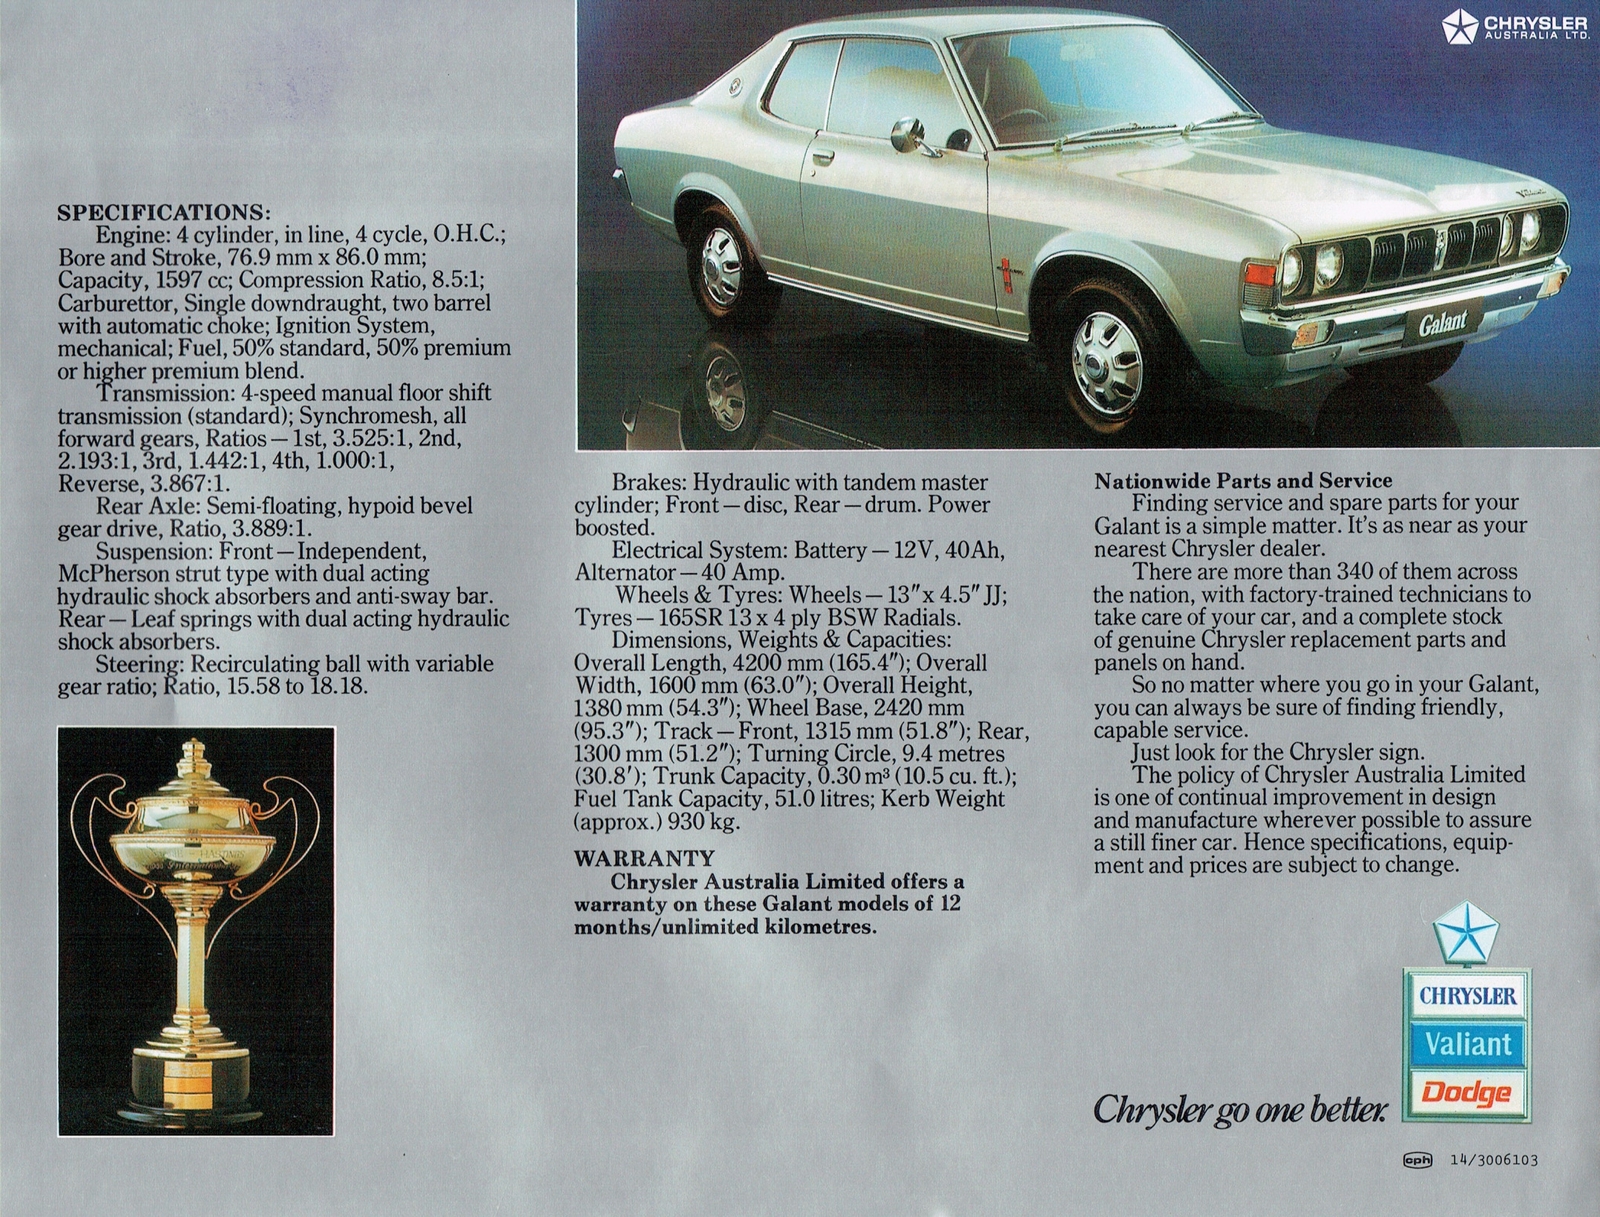 n_1976 Chrysler Galant Hardtop-04.jpg